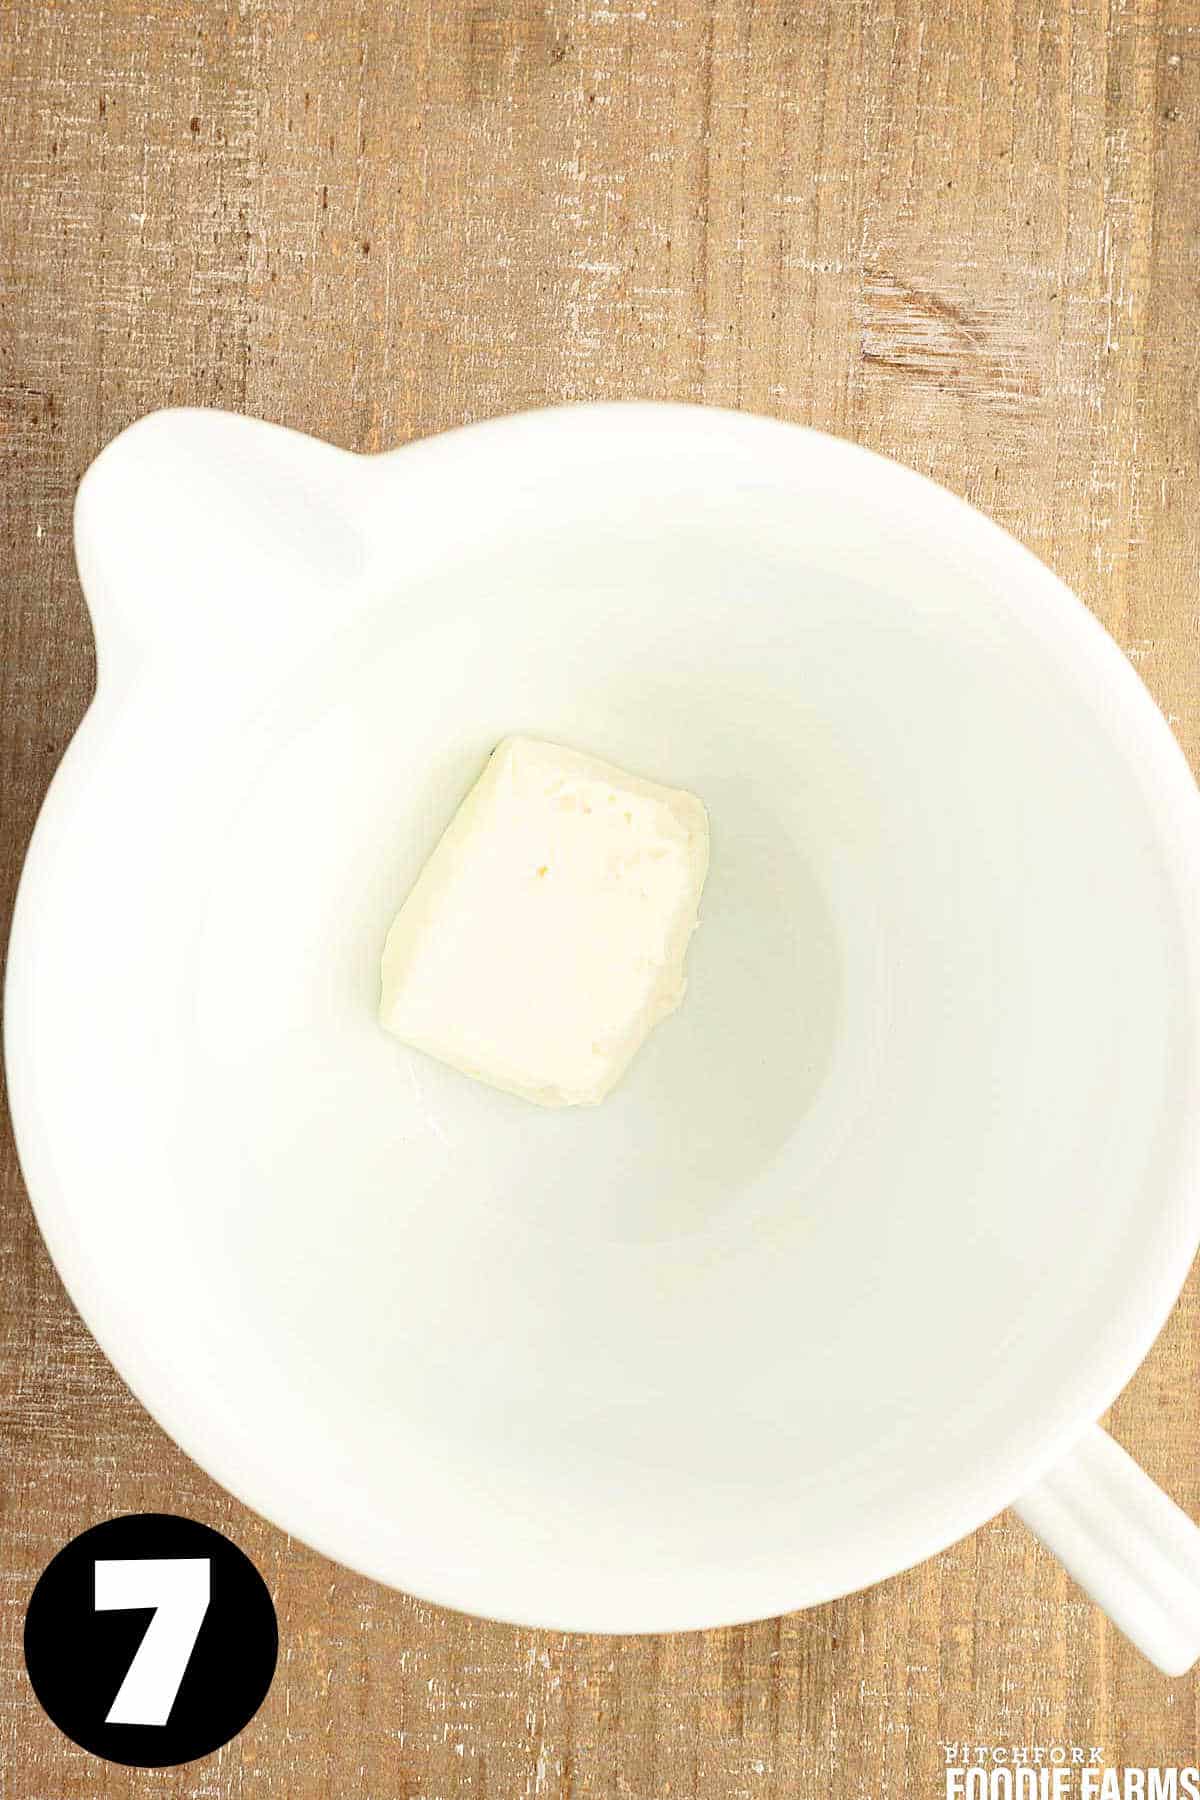 Cream cheese in a white bowl.